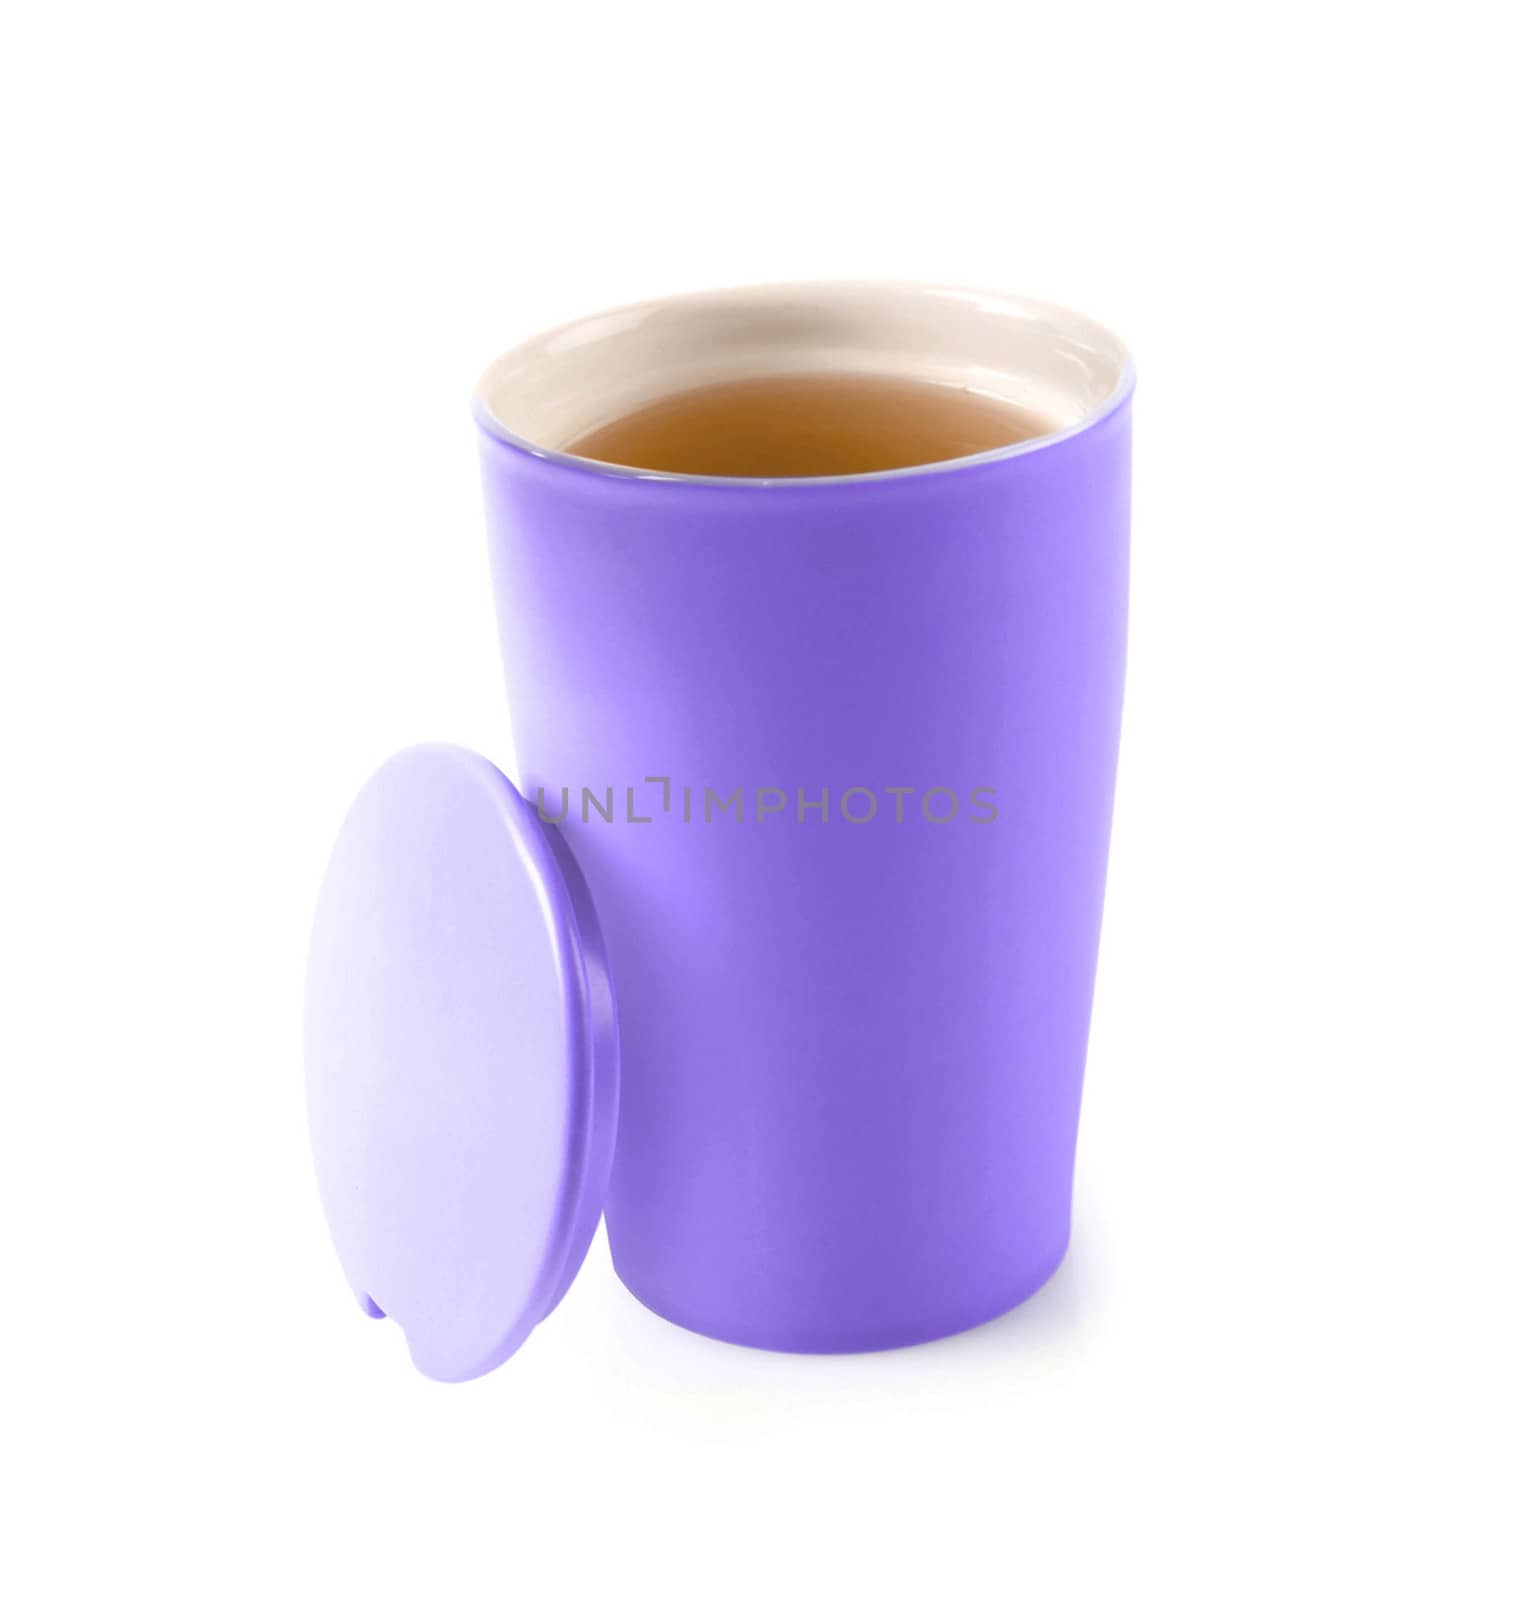 tea in thermos mug by shutswis